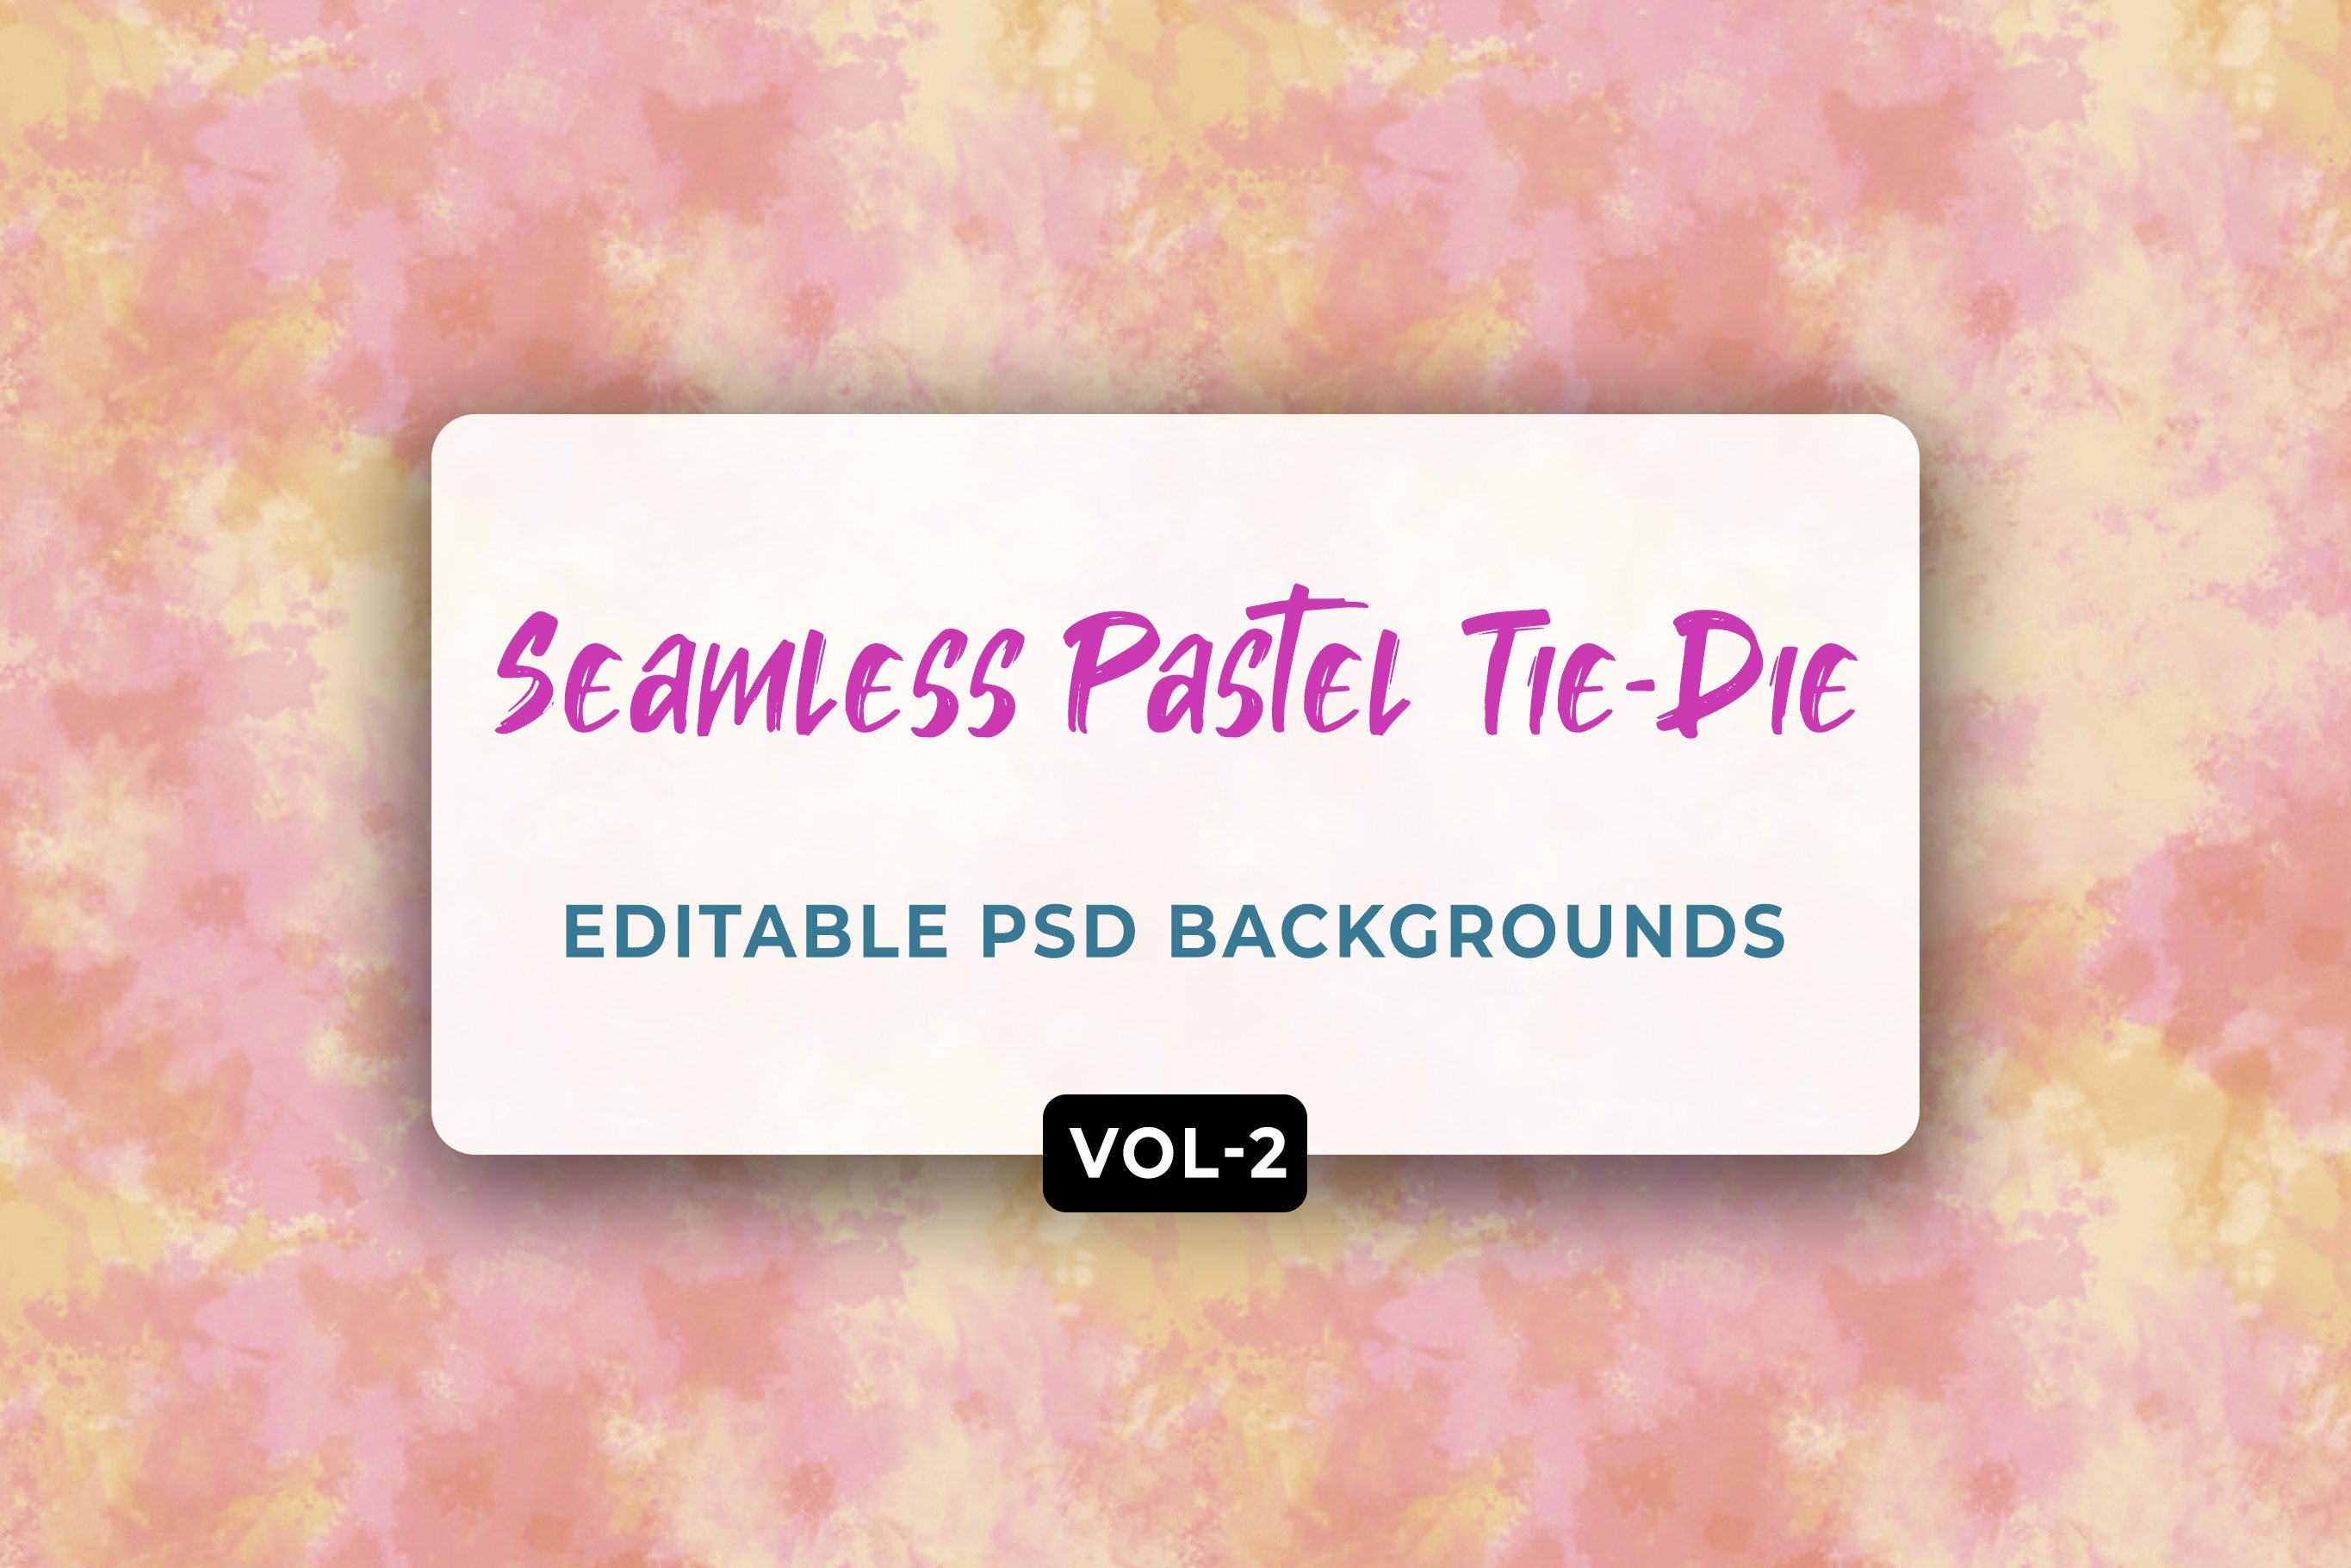 Seamless Pastel Tie-Dye Vol-2 cover image.